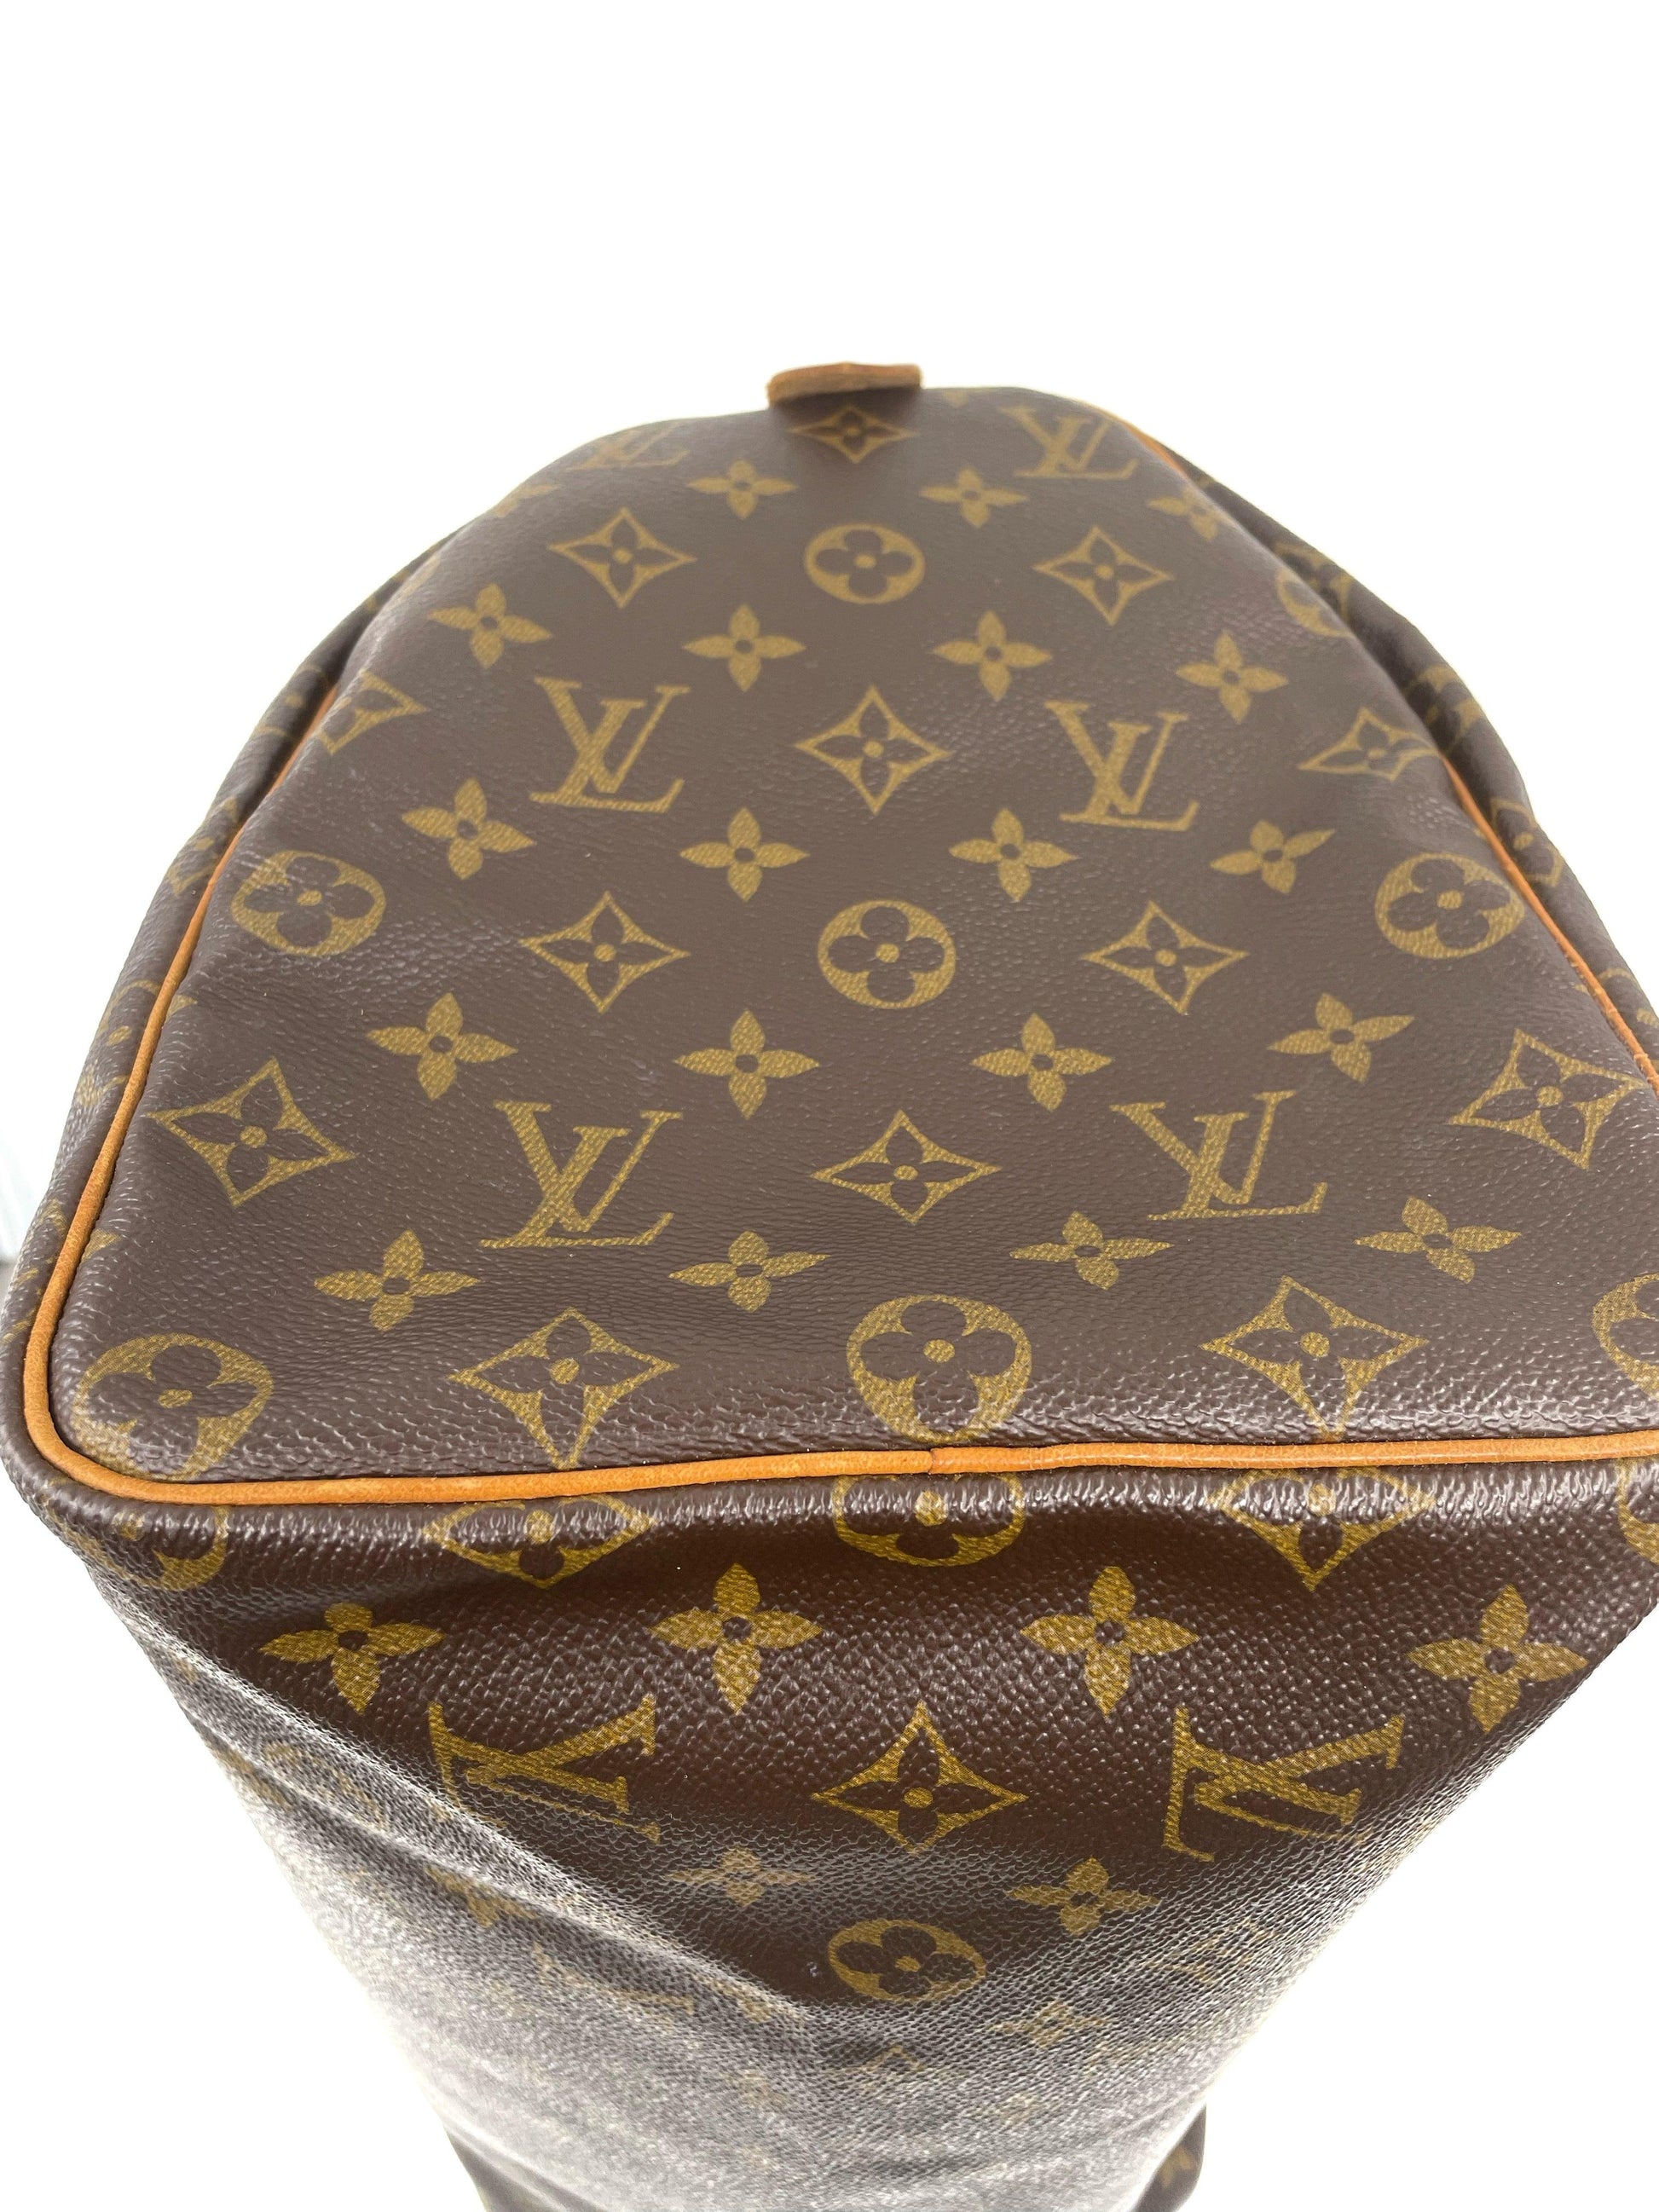 Louis Vuitton 2002 Monogram Speedy 40 Handbag · INTO